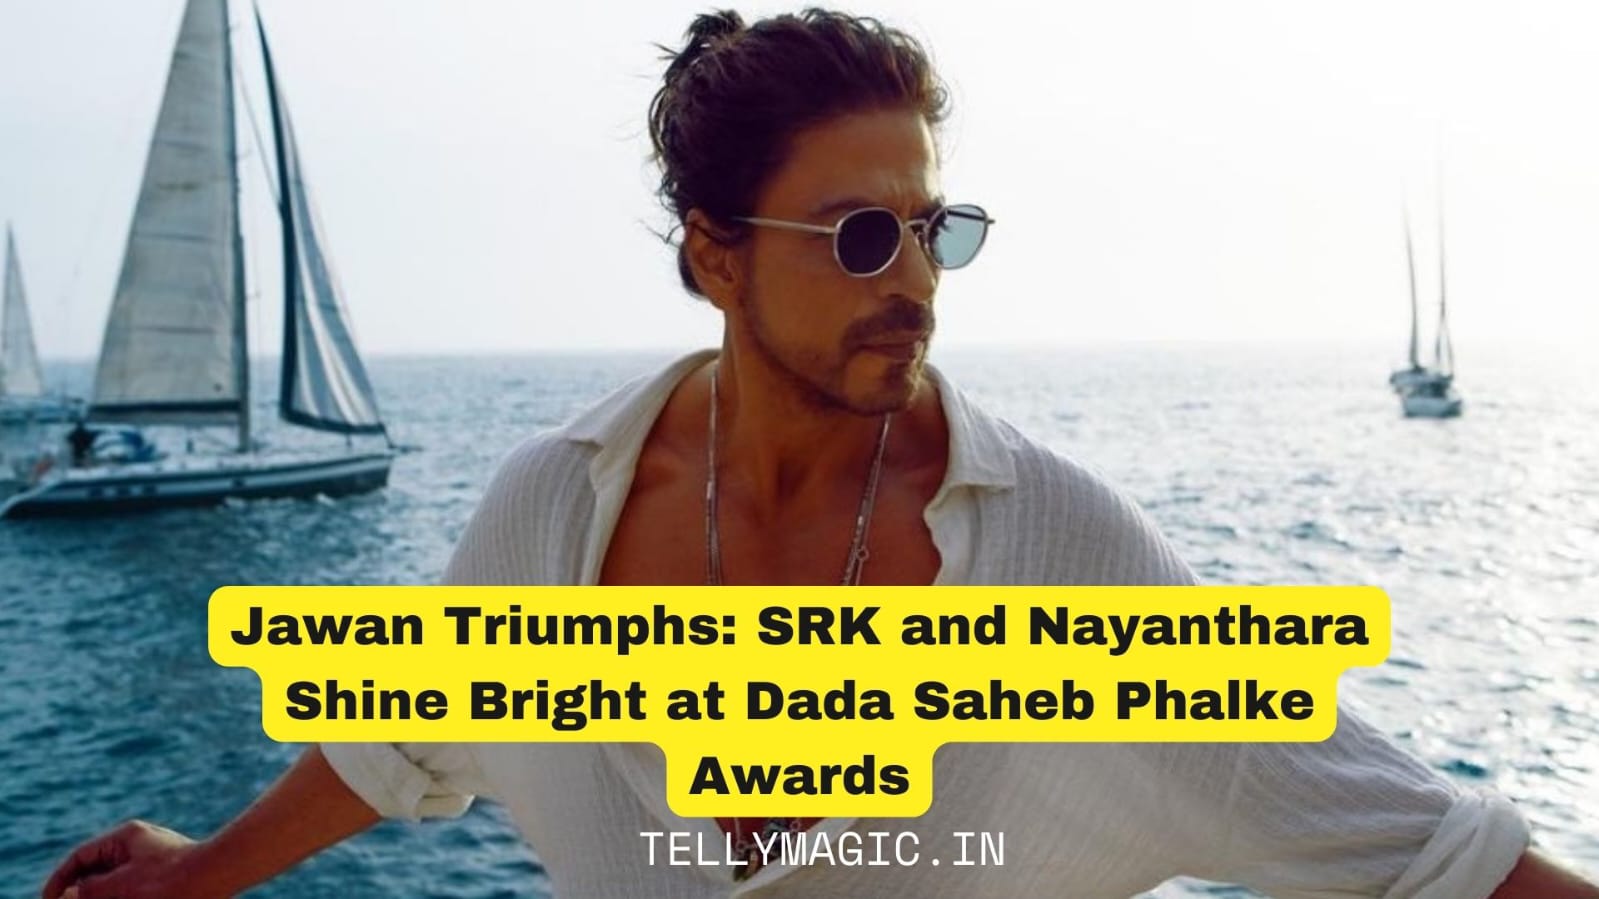 Jawan Triumphs: SRK and Nayanthara Shine Bright at Dada Saheb Phalke Awards